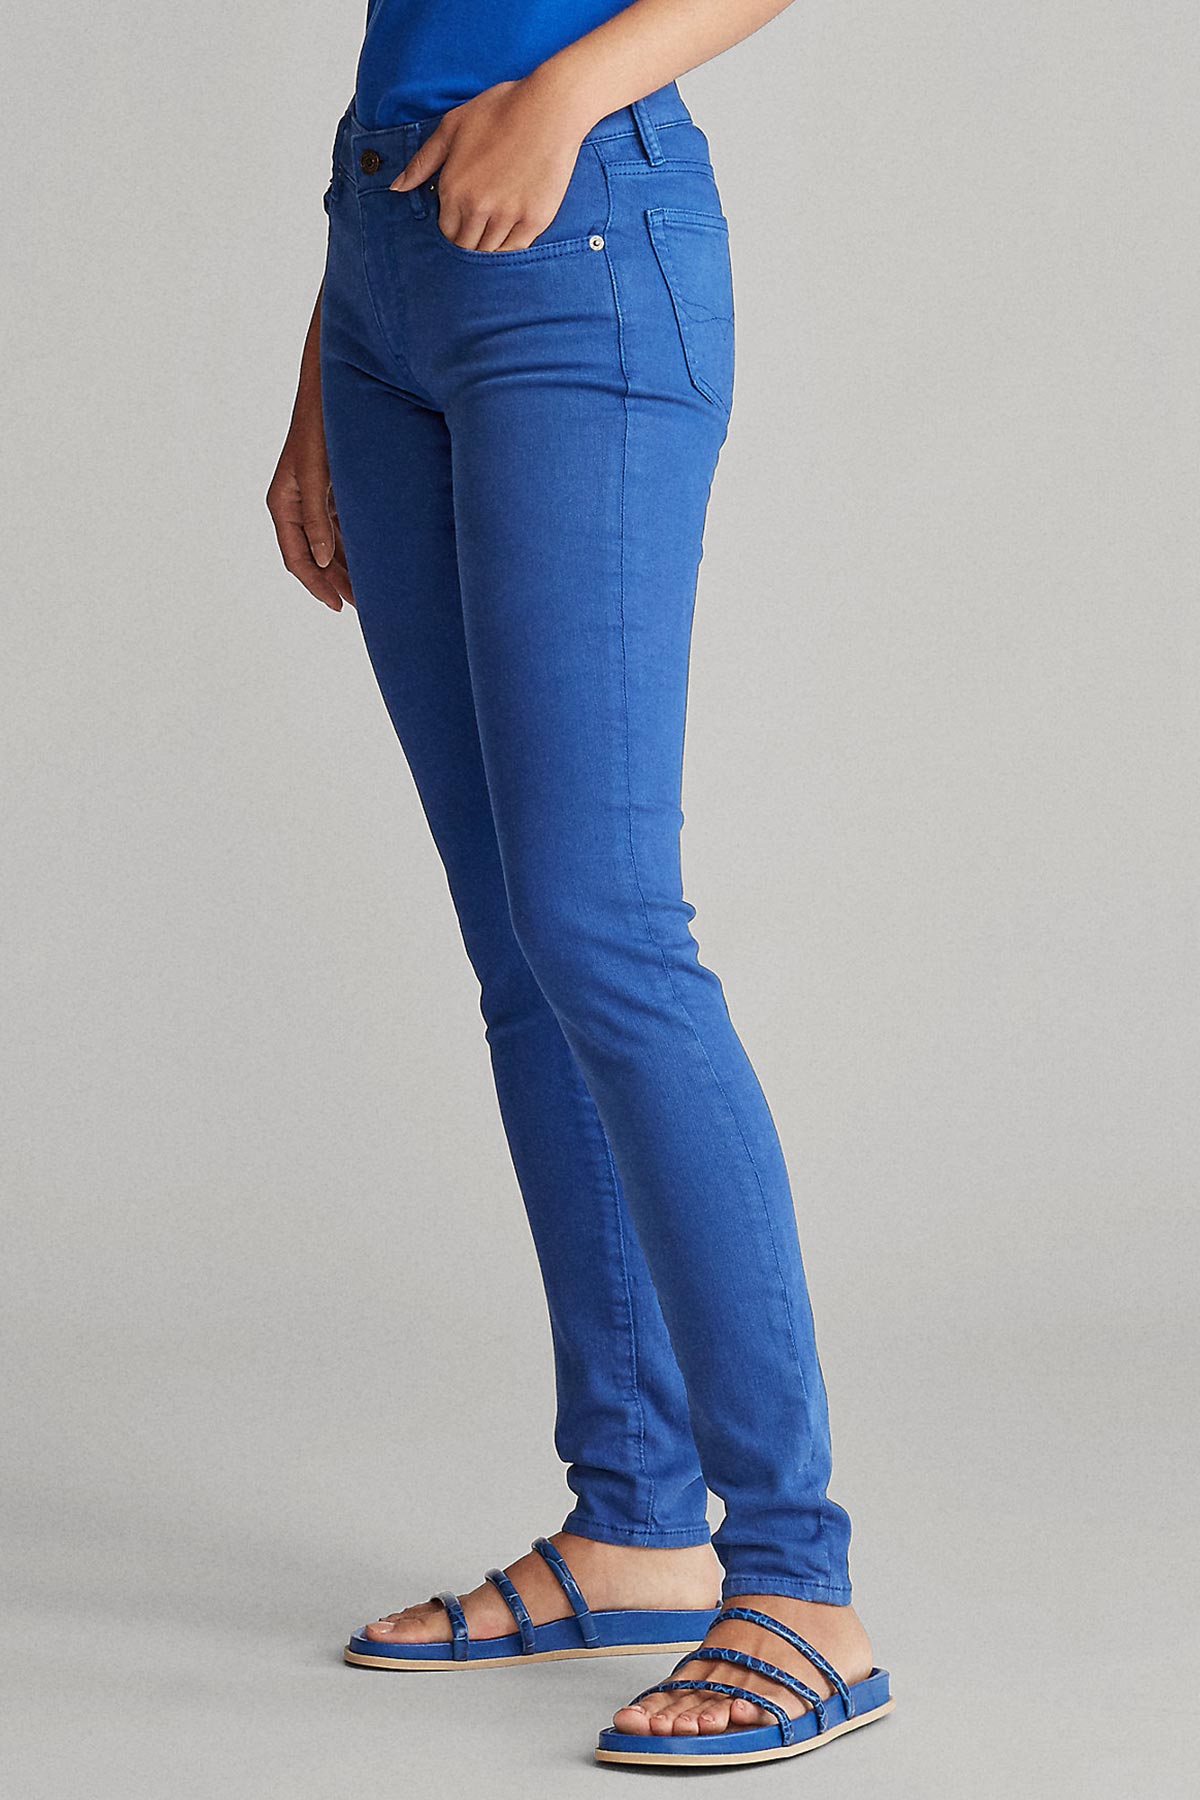 Polo Ralph Lauren The Tompkins Skinny Jeans-Libas Trendy Fashion Store